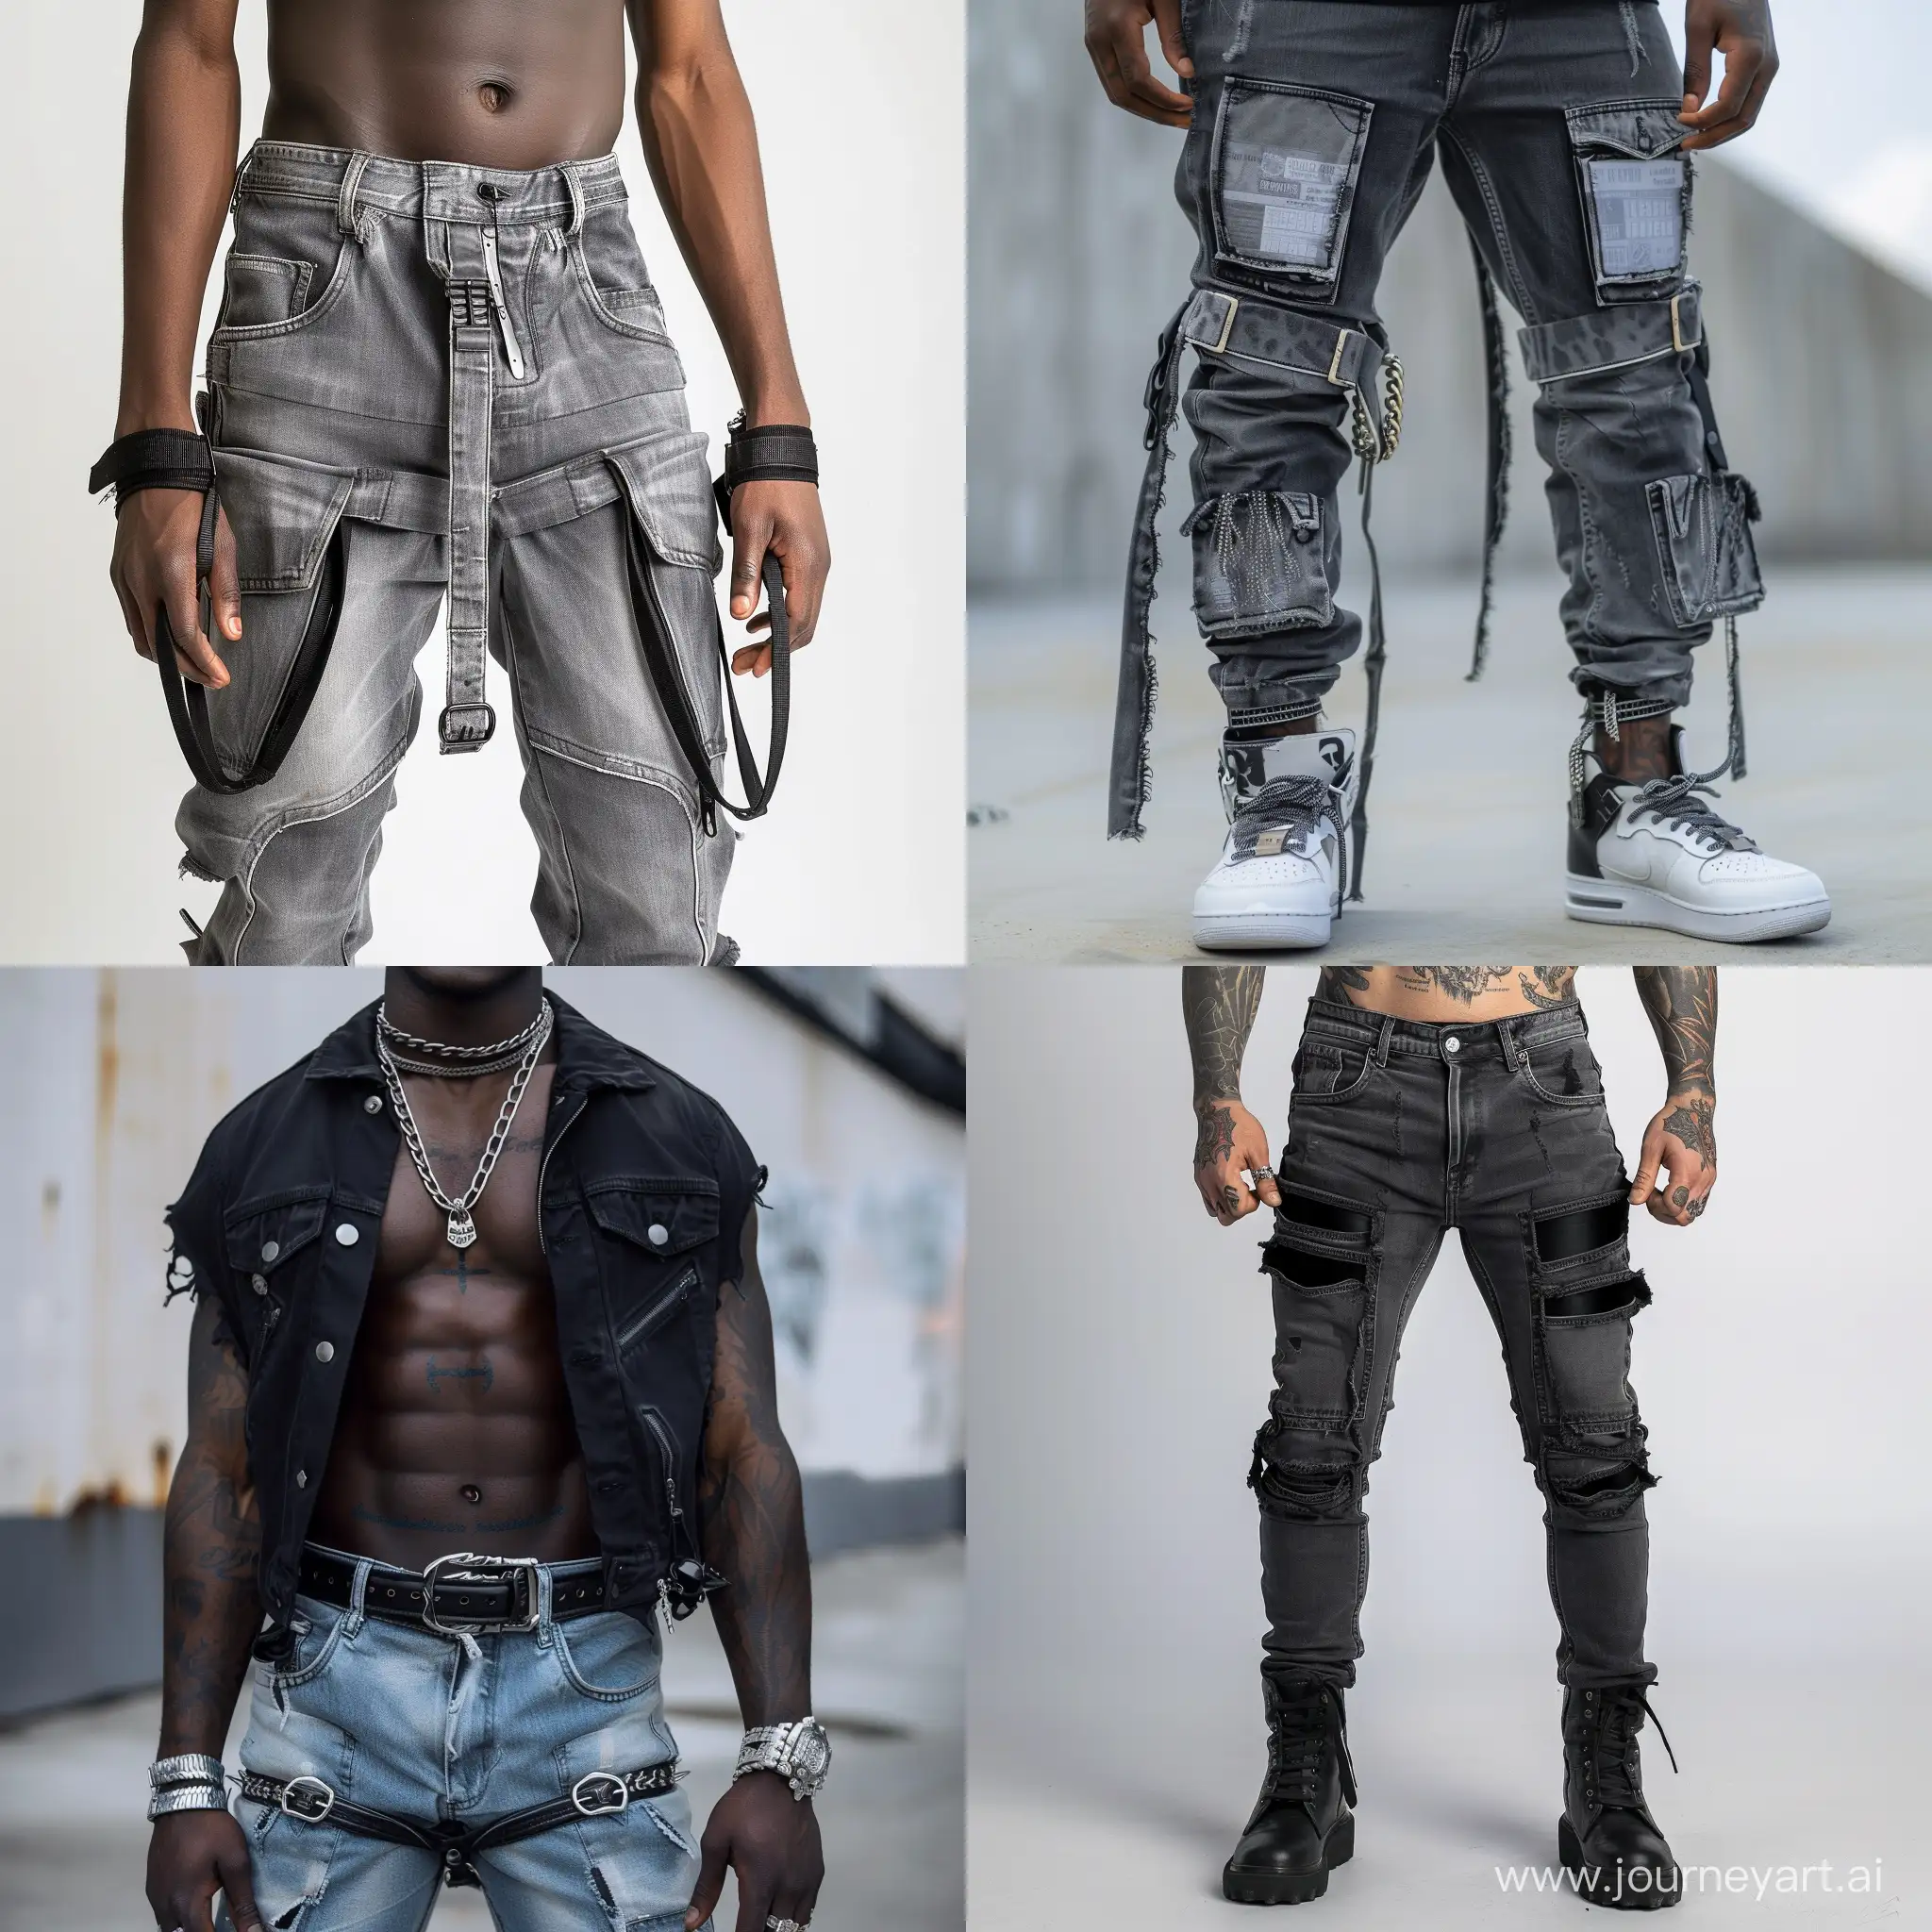 Powerful-Storm-XMen-Character-in-Stylish-MidriffTight-Jeans